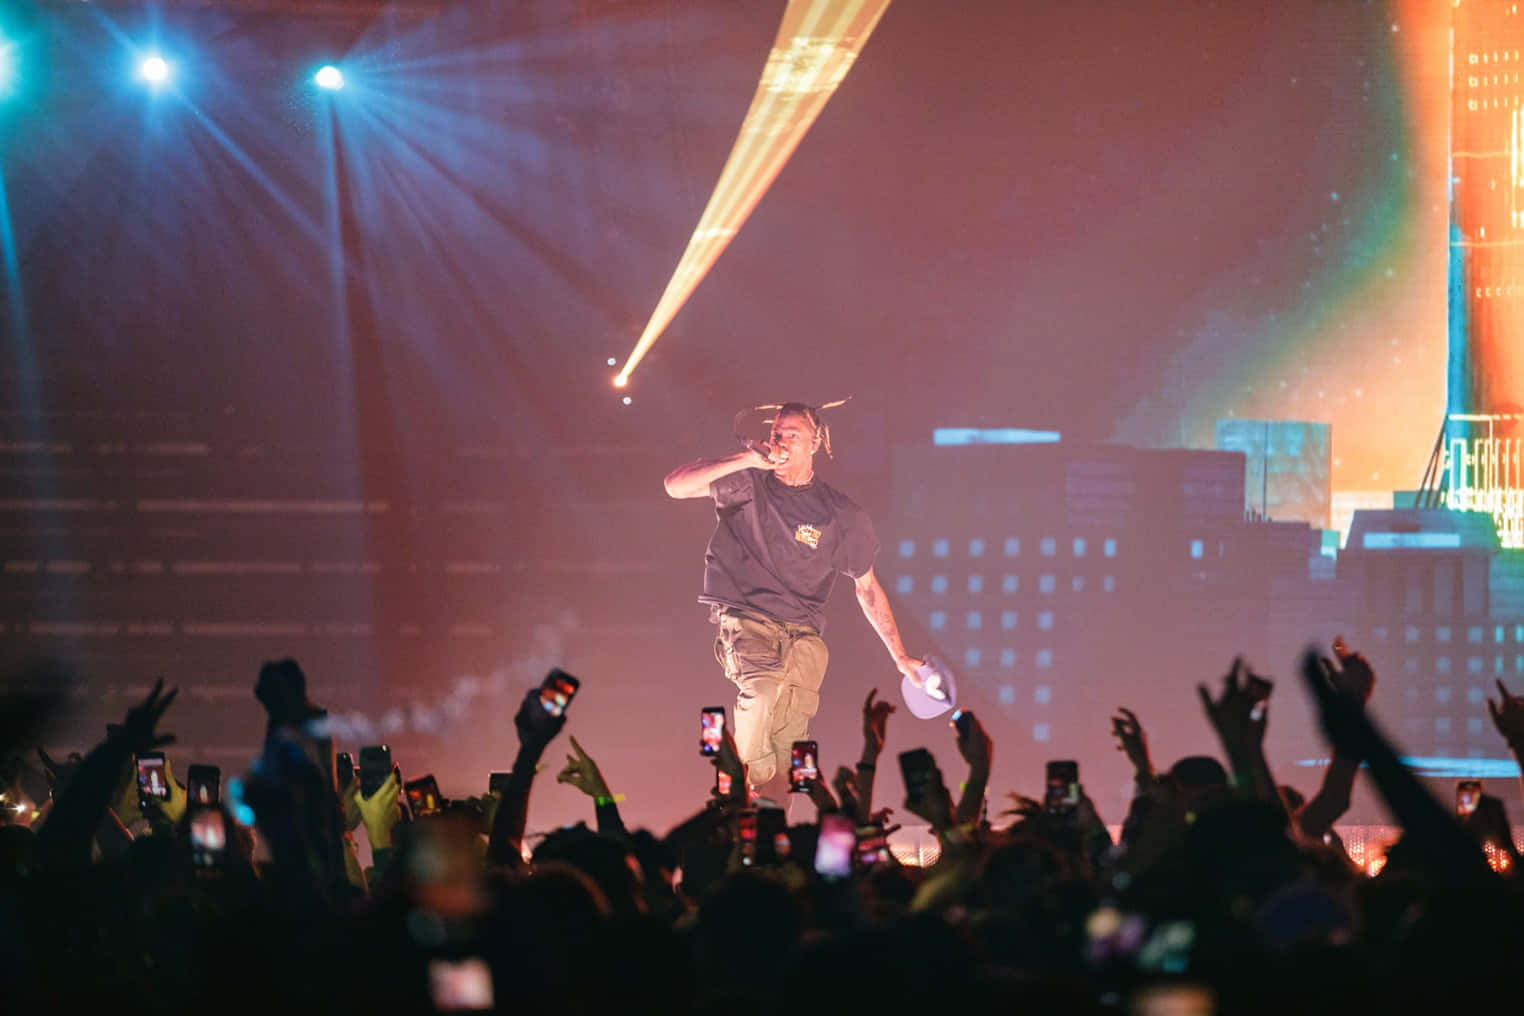 "Dream Chaser: Hip-hop artist Travis Scott builds a successful career"